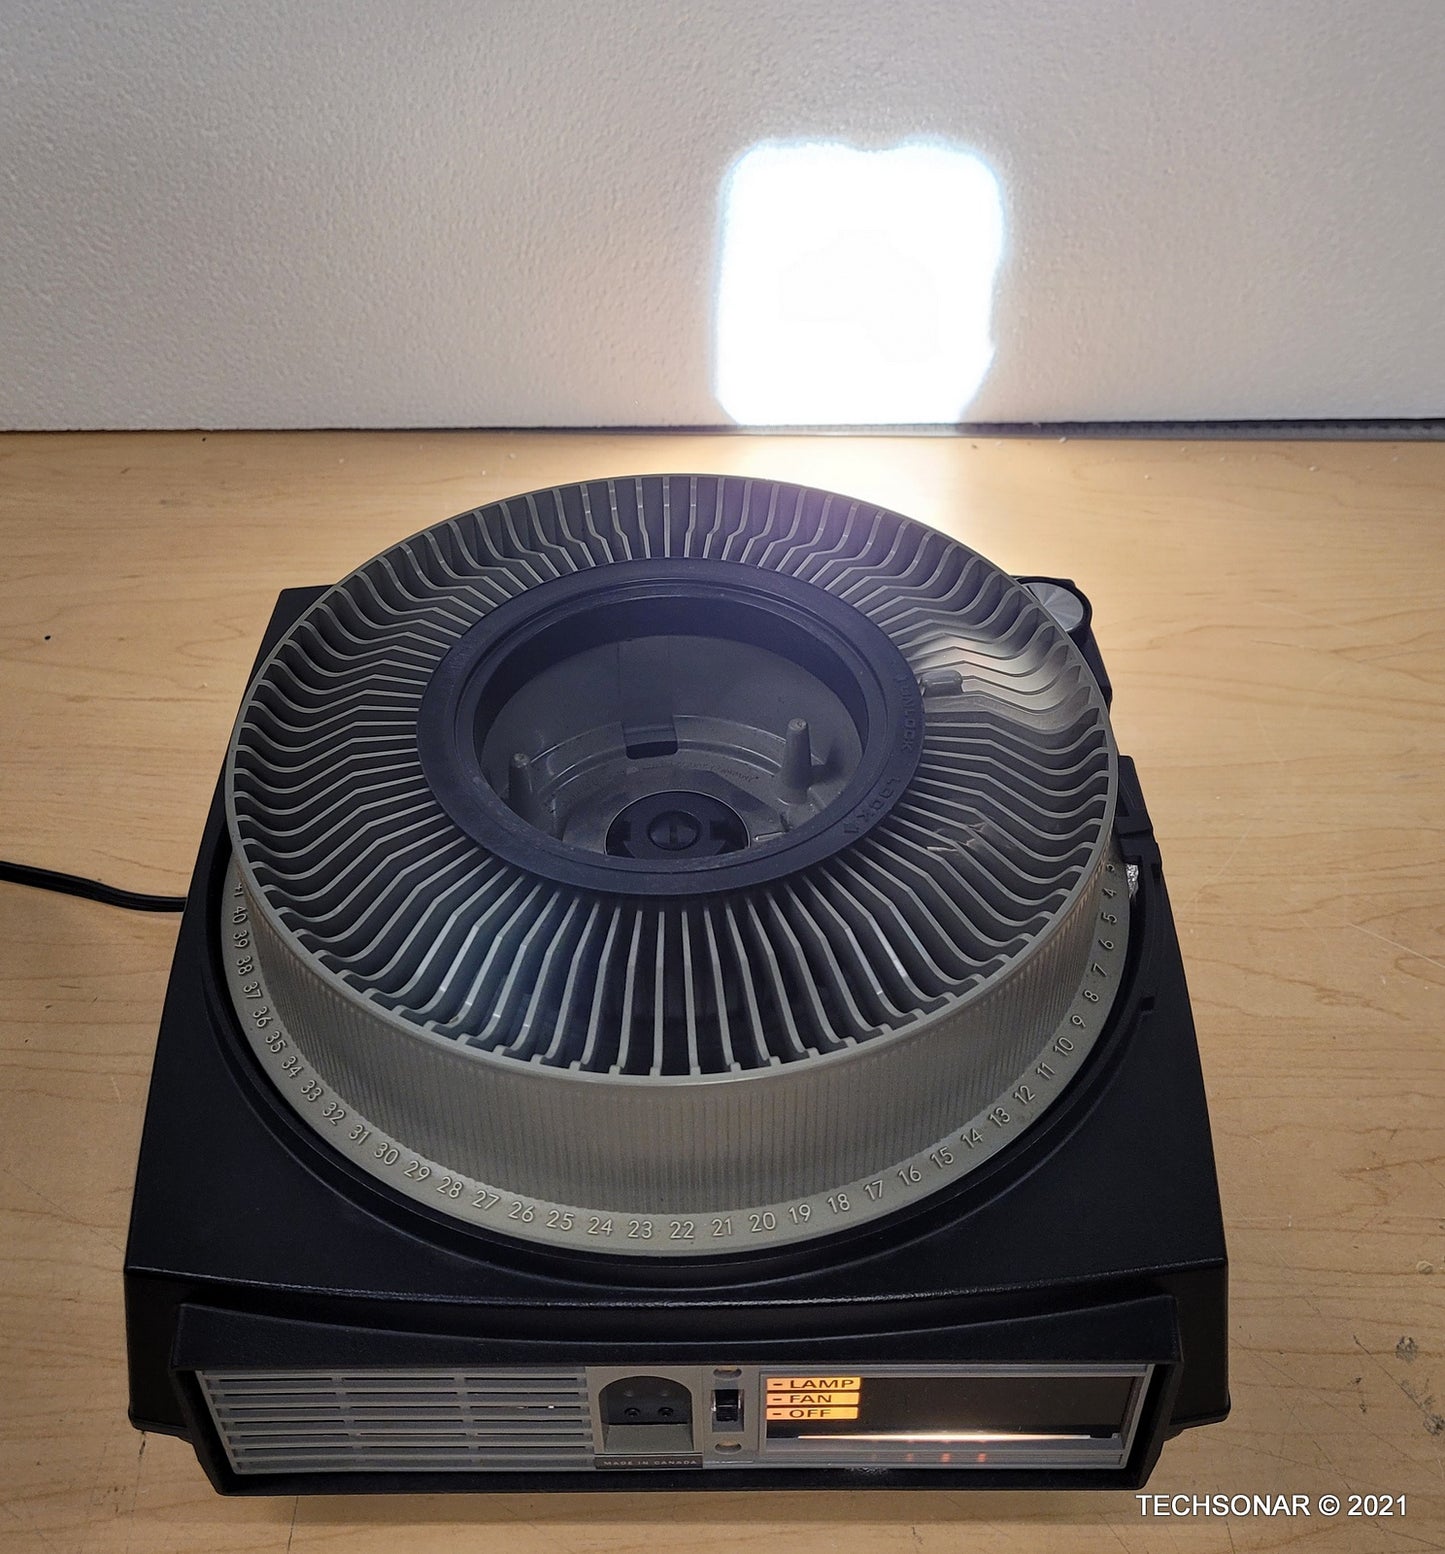 Kodak Carousel 760H Slide Projector 102mm f/2.8 - Power,Lamp,Fan,Lens Check OK